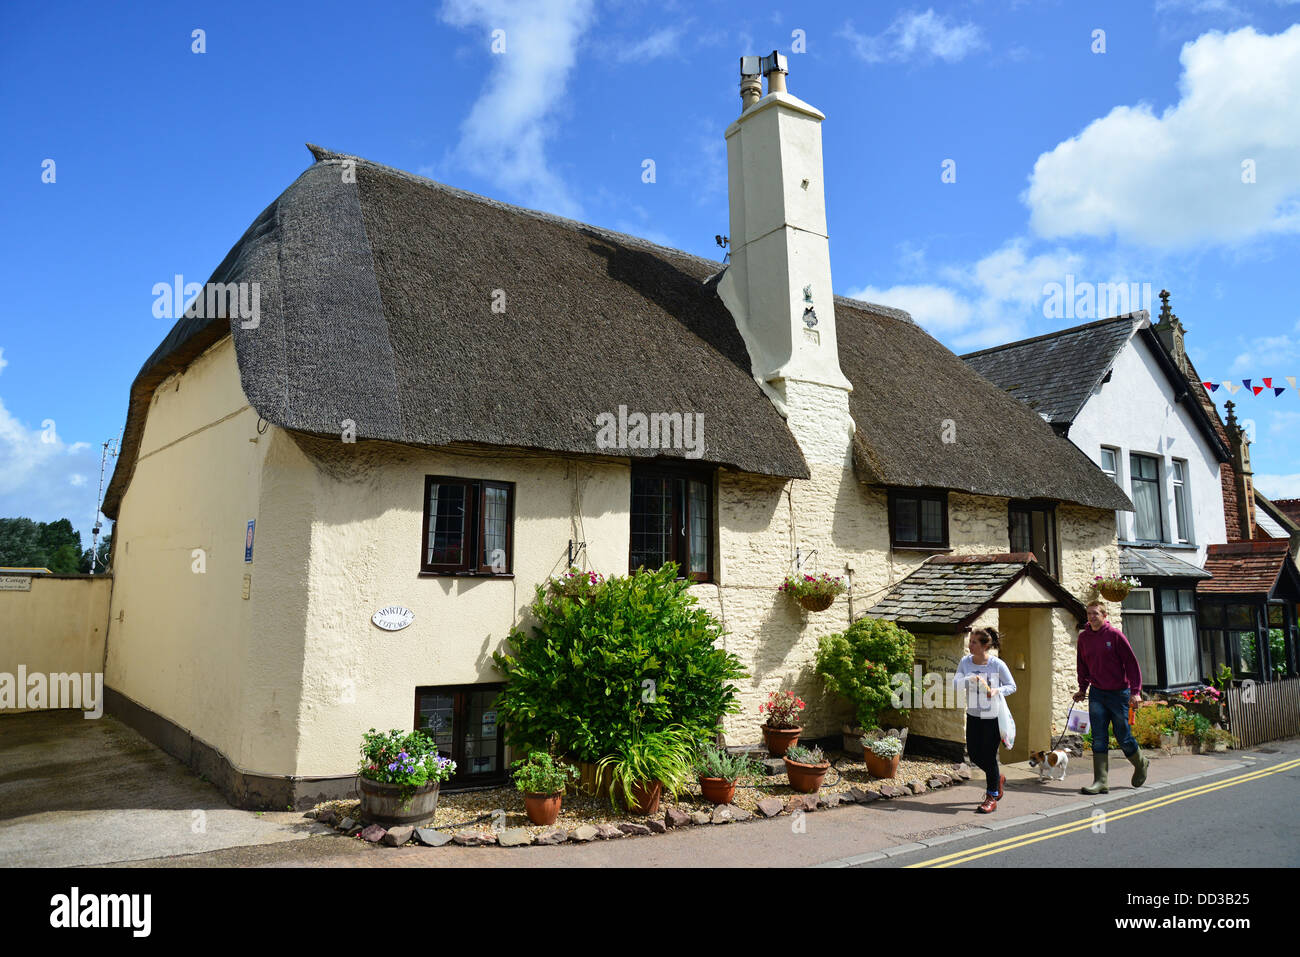 Thatched Myrtle Cottage B&B, High Street, Porlock, Parc National d'Exmoor, Somerset, England, United Kingdom Banque D'Images